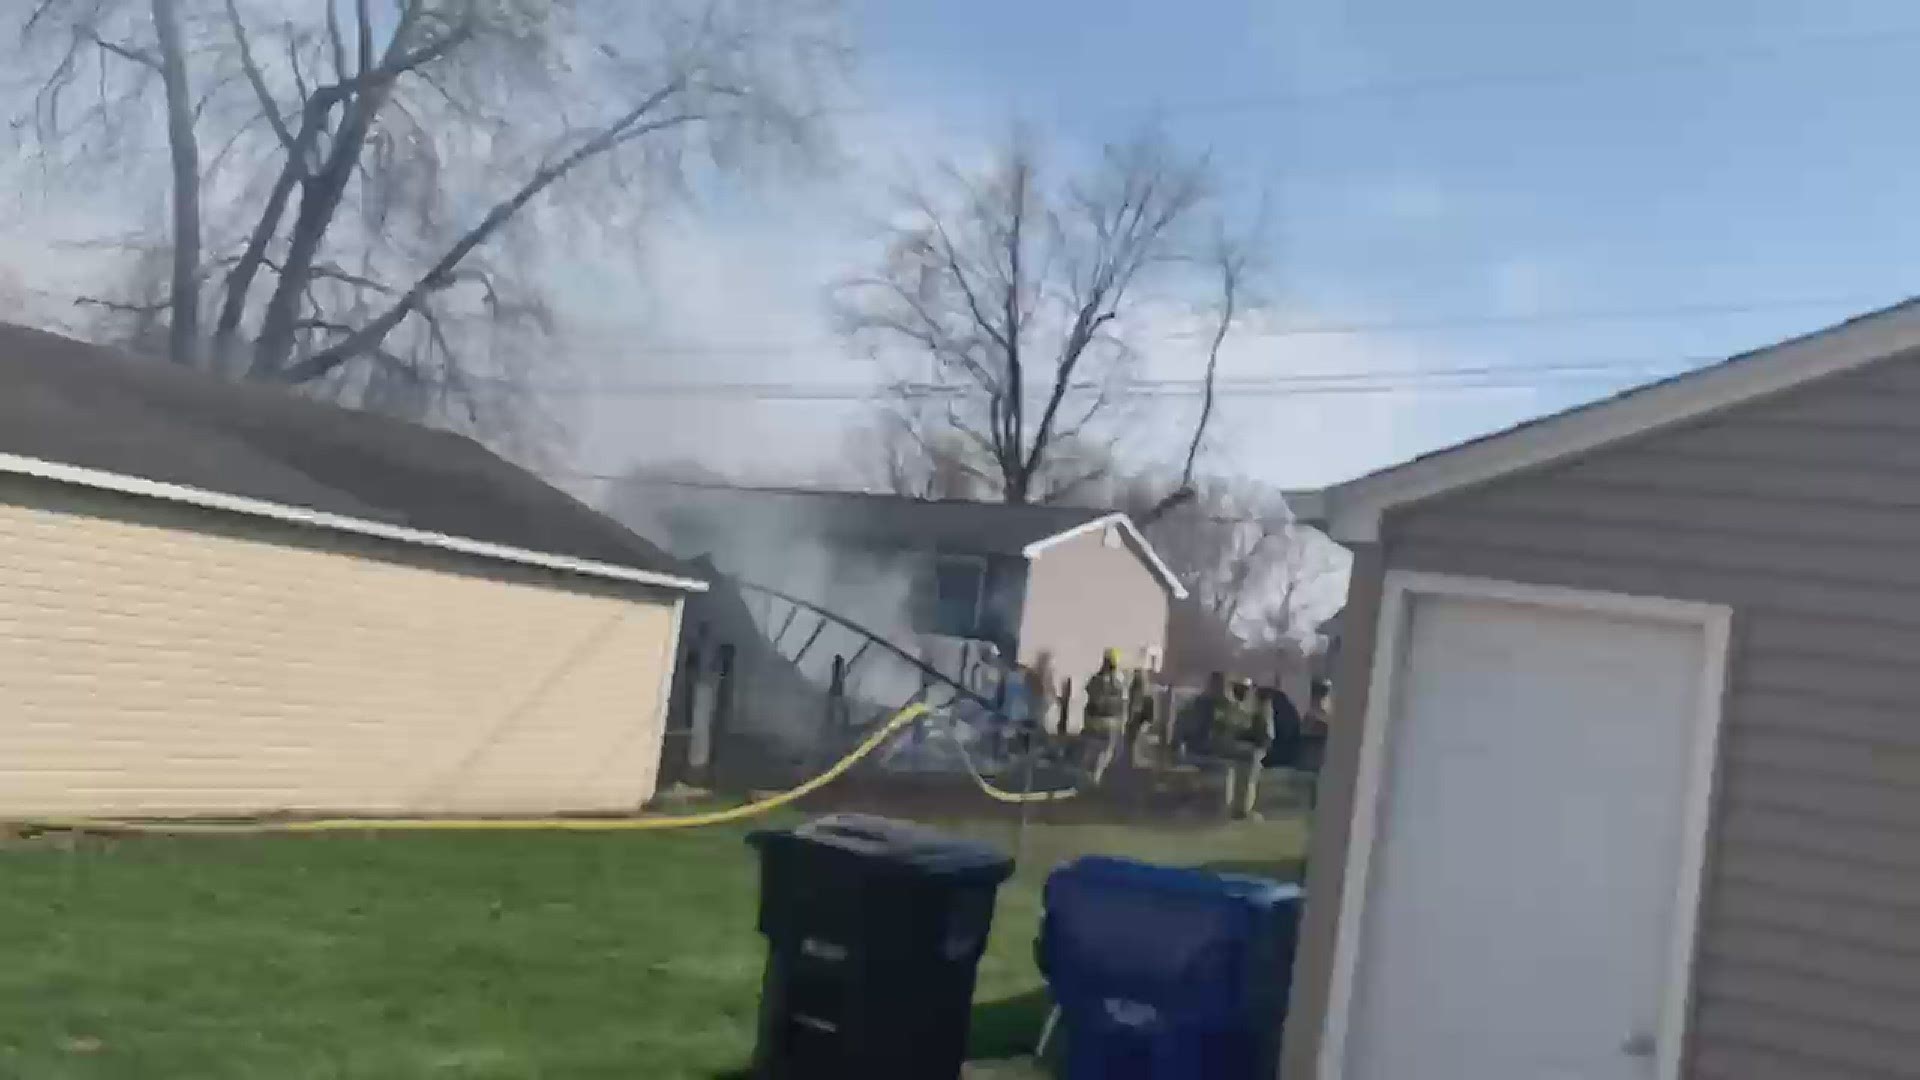 Fire breaks out in Moline, Illinois